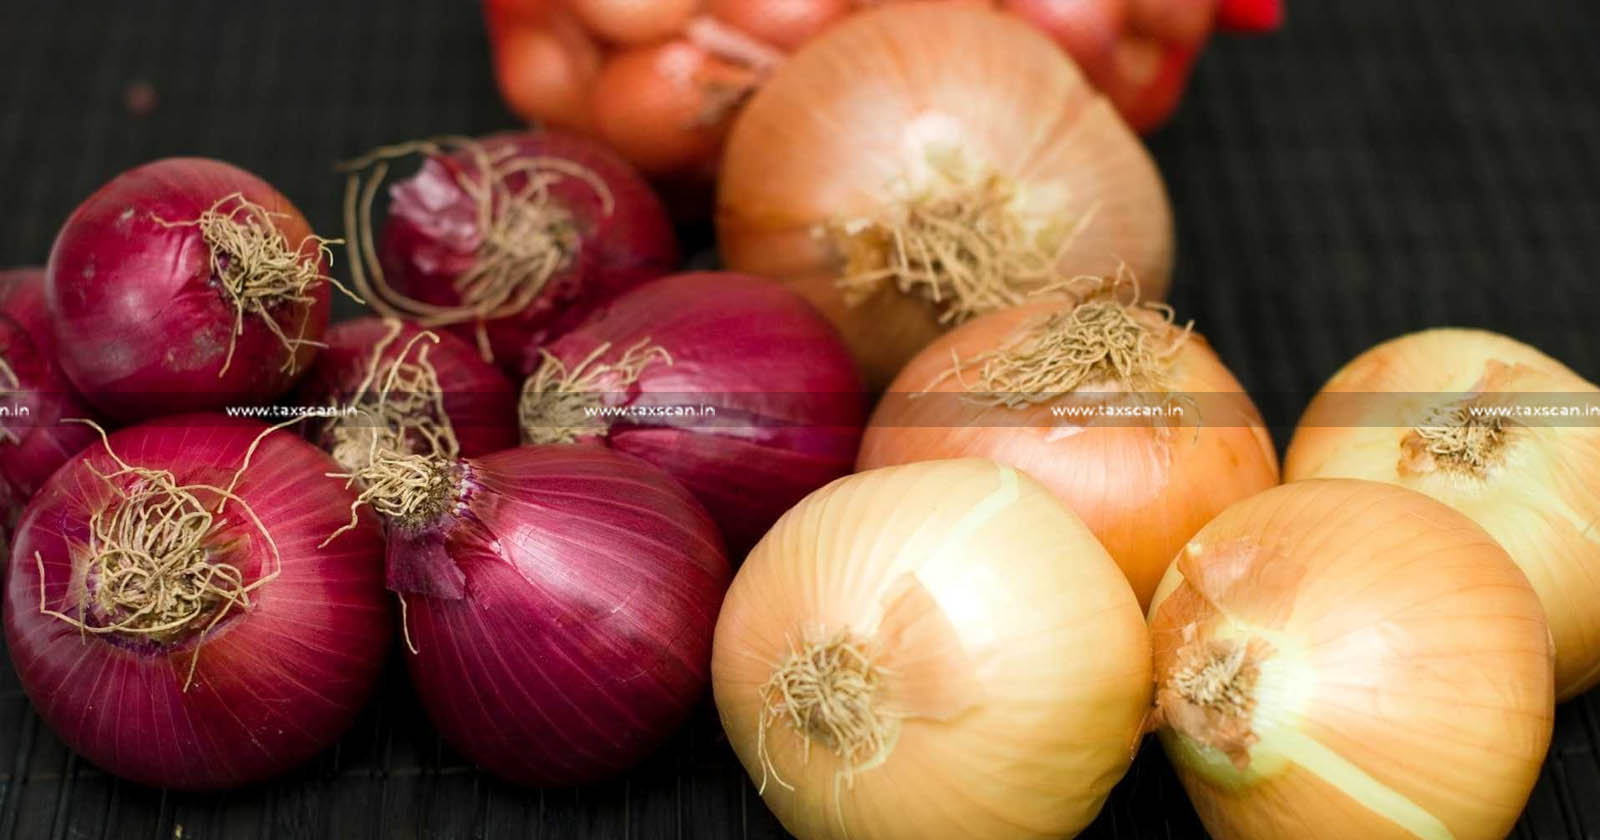 UAE - NCEL - DGFT - Onion export news - UAE onion import - Indian onion export - taxscan